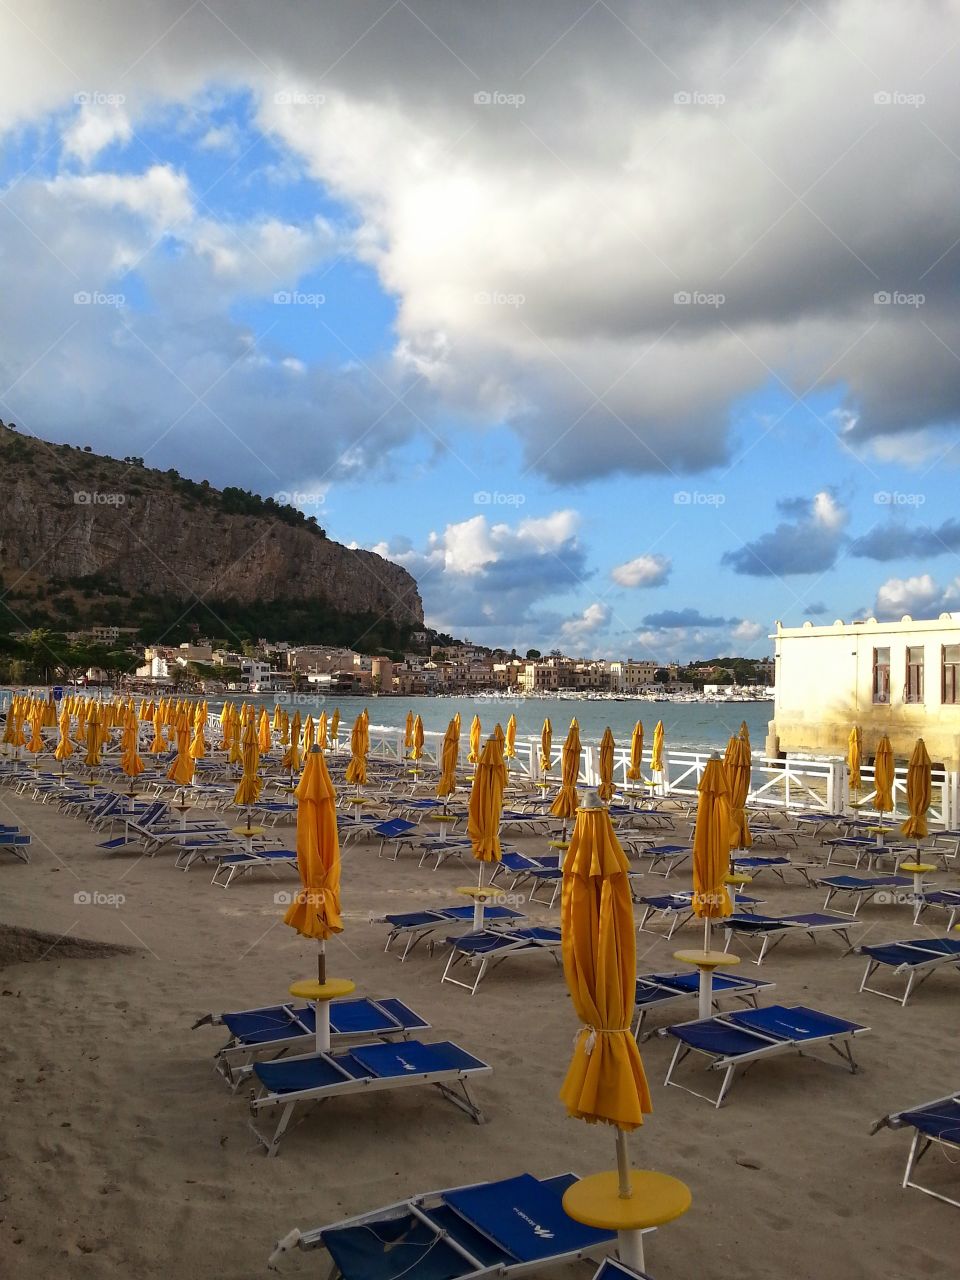 Umbrellas on the beach. Several umbrellas on the beach